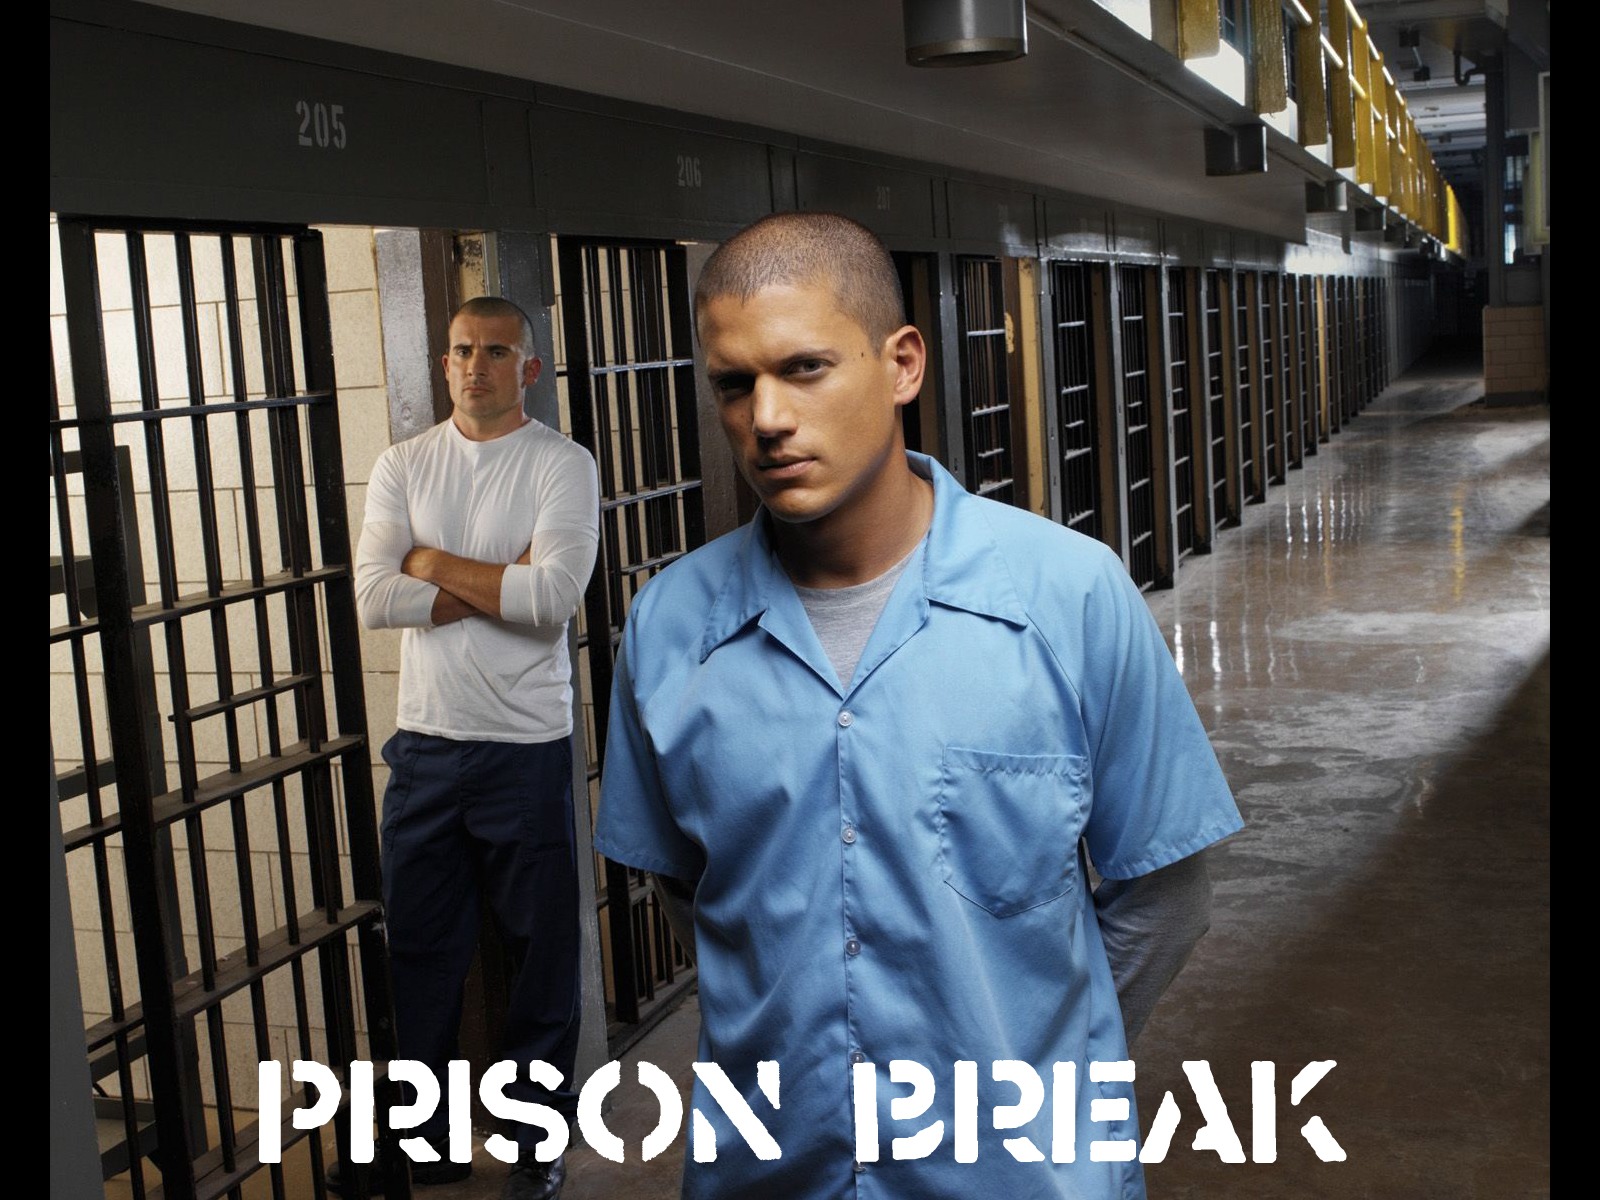 Michael Scofield Lincoln Burrows Wallpaper Prison Break Movies Wallpaper in jpg format for free download